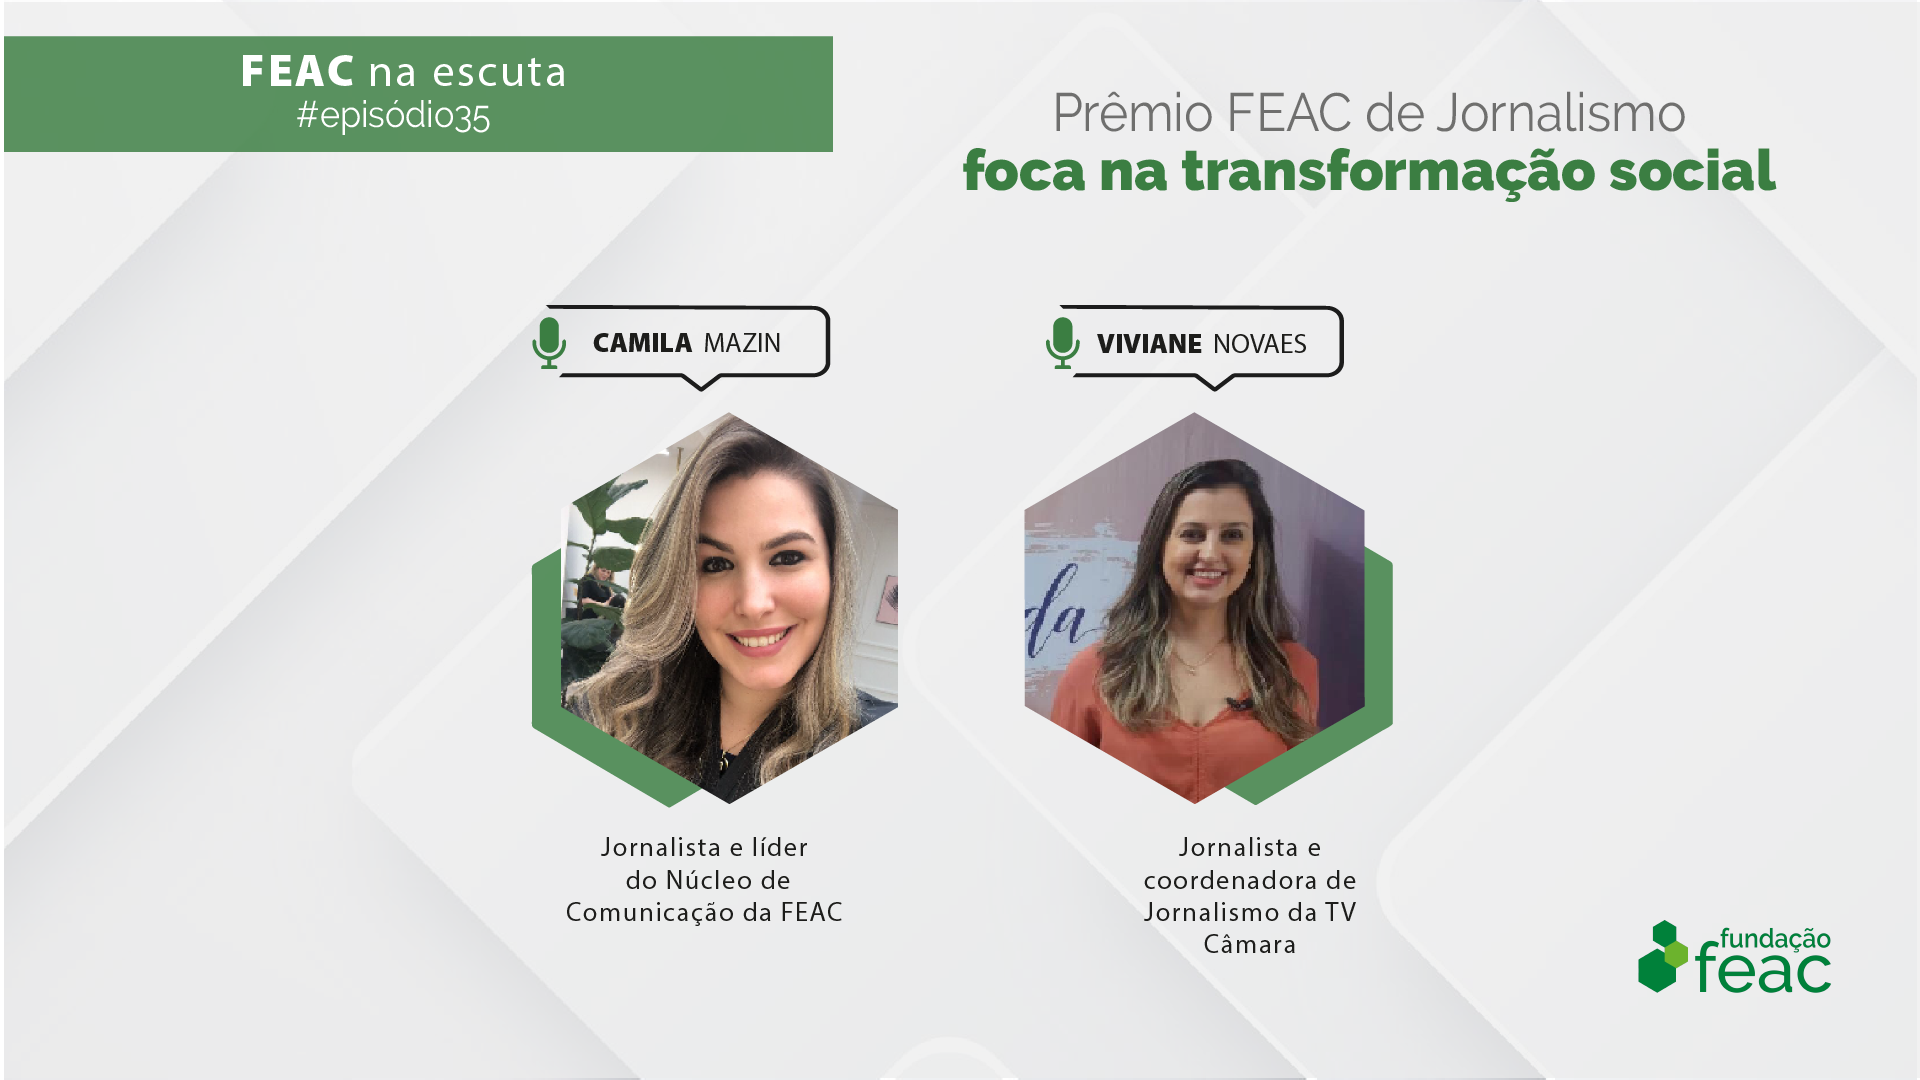 FEAC na escuta 35 - Prêmio FEAC de Jornalismo